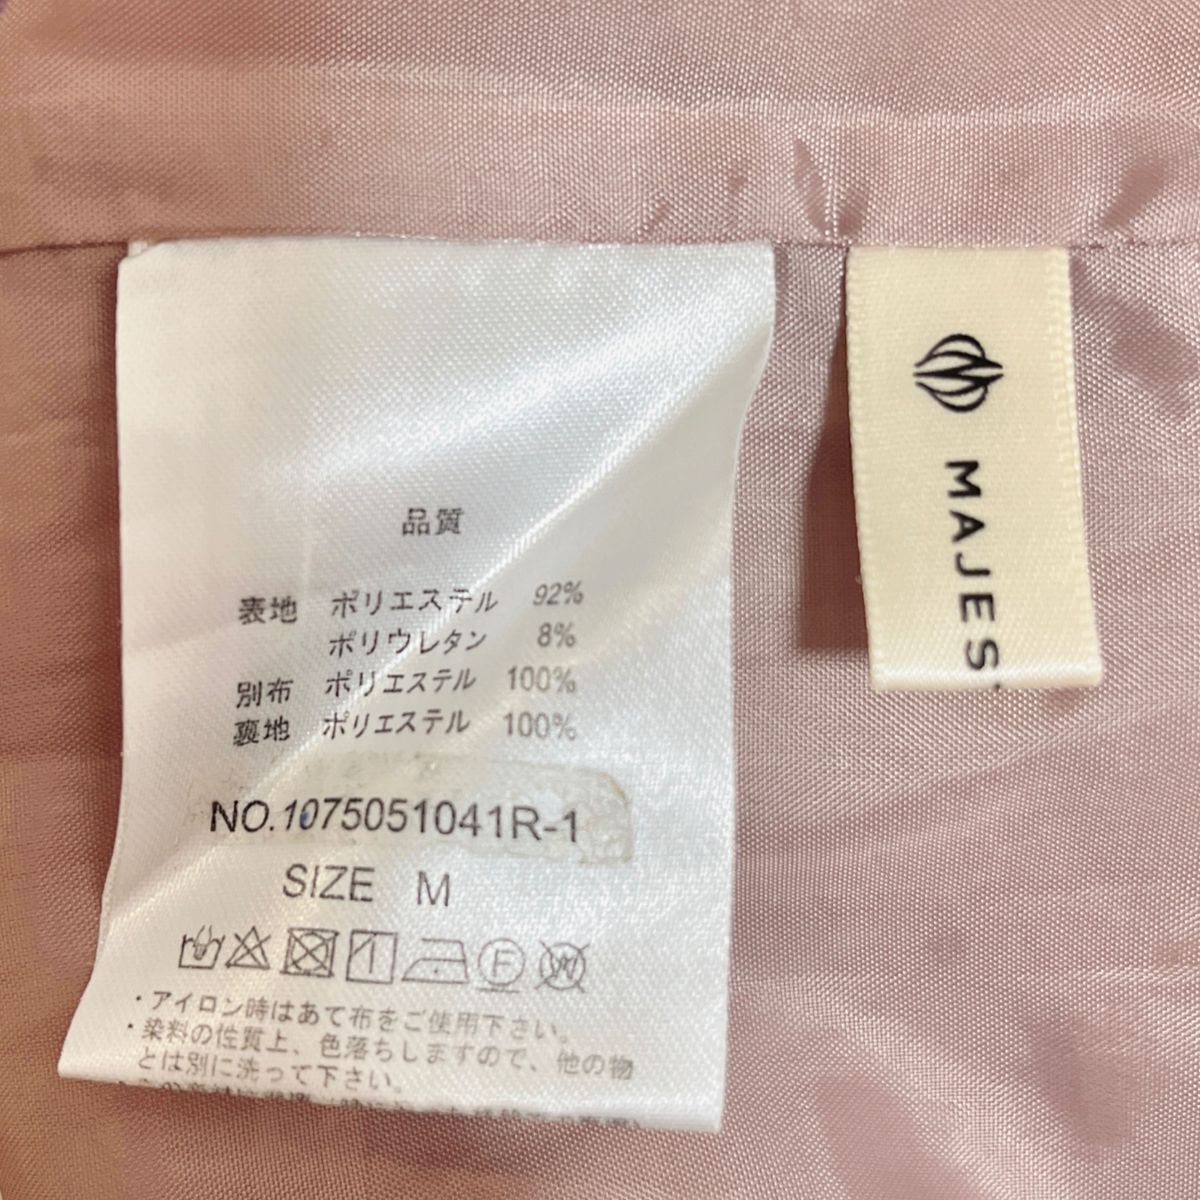 【MAJESTIC LEGON】サイドレースアップリボン花柄スカート / ひざ丈 / ピンク